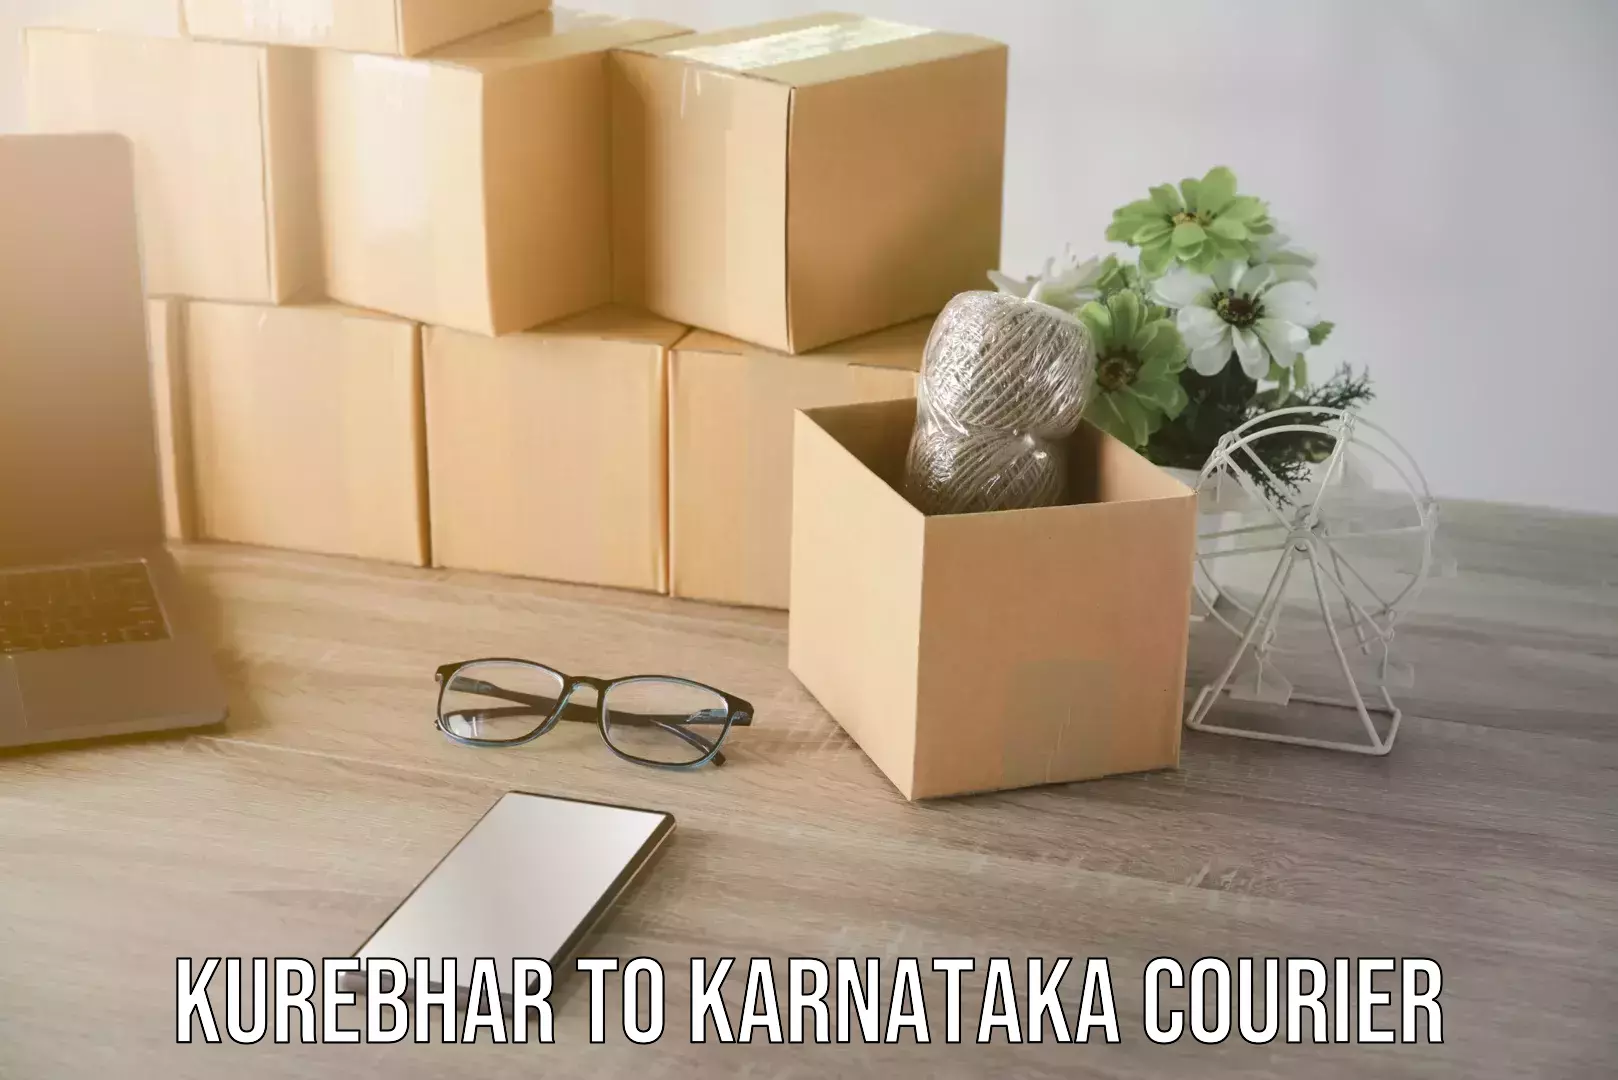 Furniture delivery service Kurebhar to Karnataka